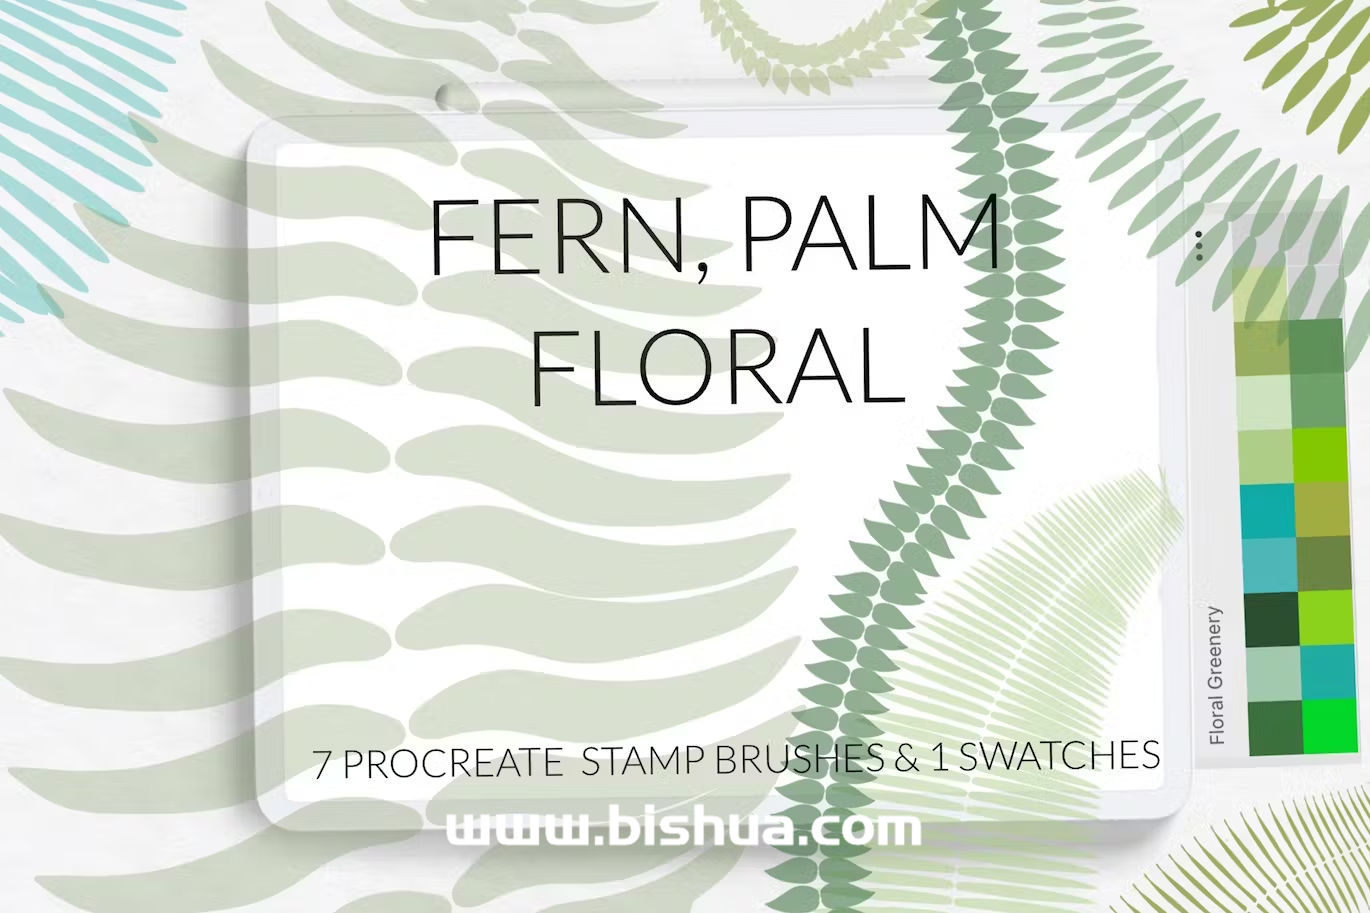 Procreate笔刷+色卡丨蕨类棕榈树，异国情调的丛林灌木丛纹理